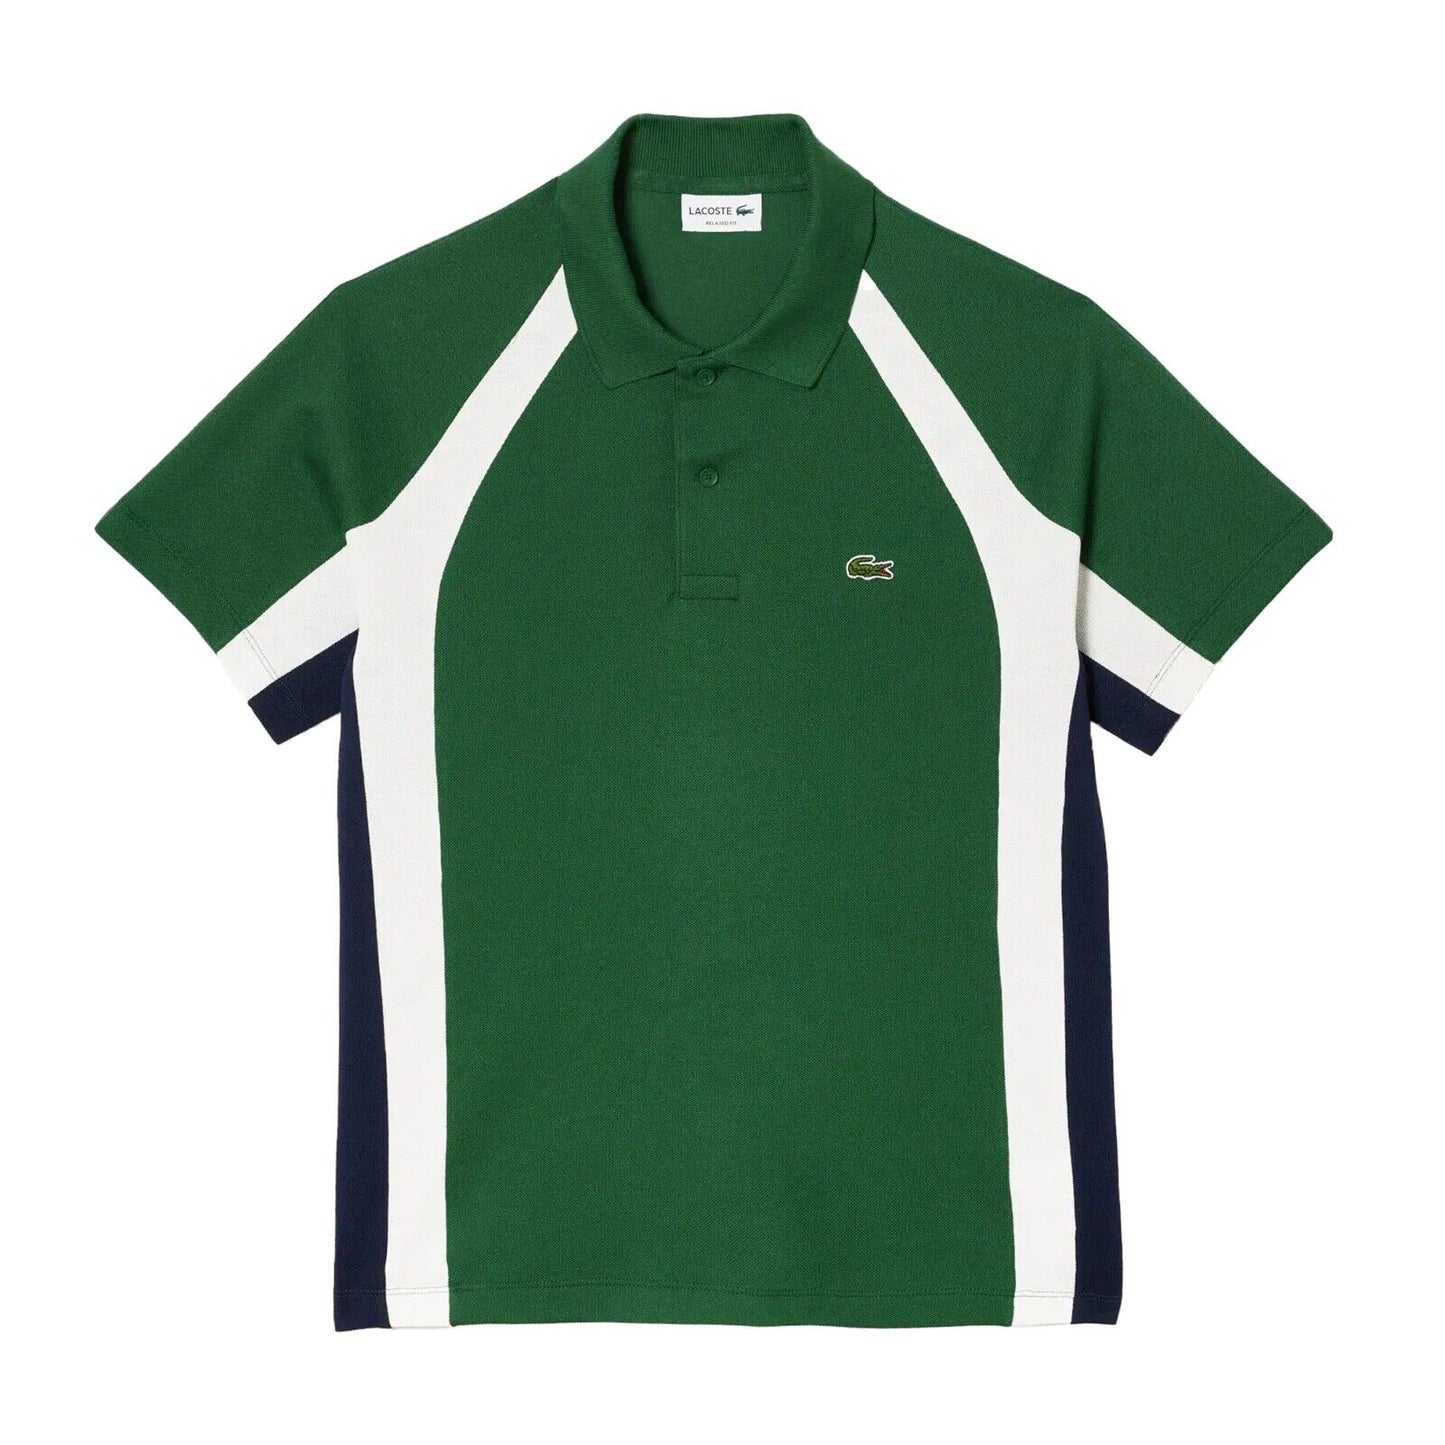 Lacoste Men’s Cotton Mini-Piqué Polo Shirt in Green Navy and White PH5583 51 WN7